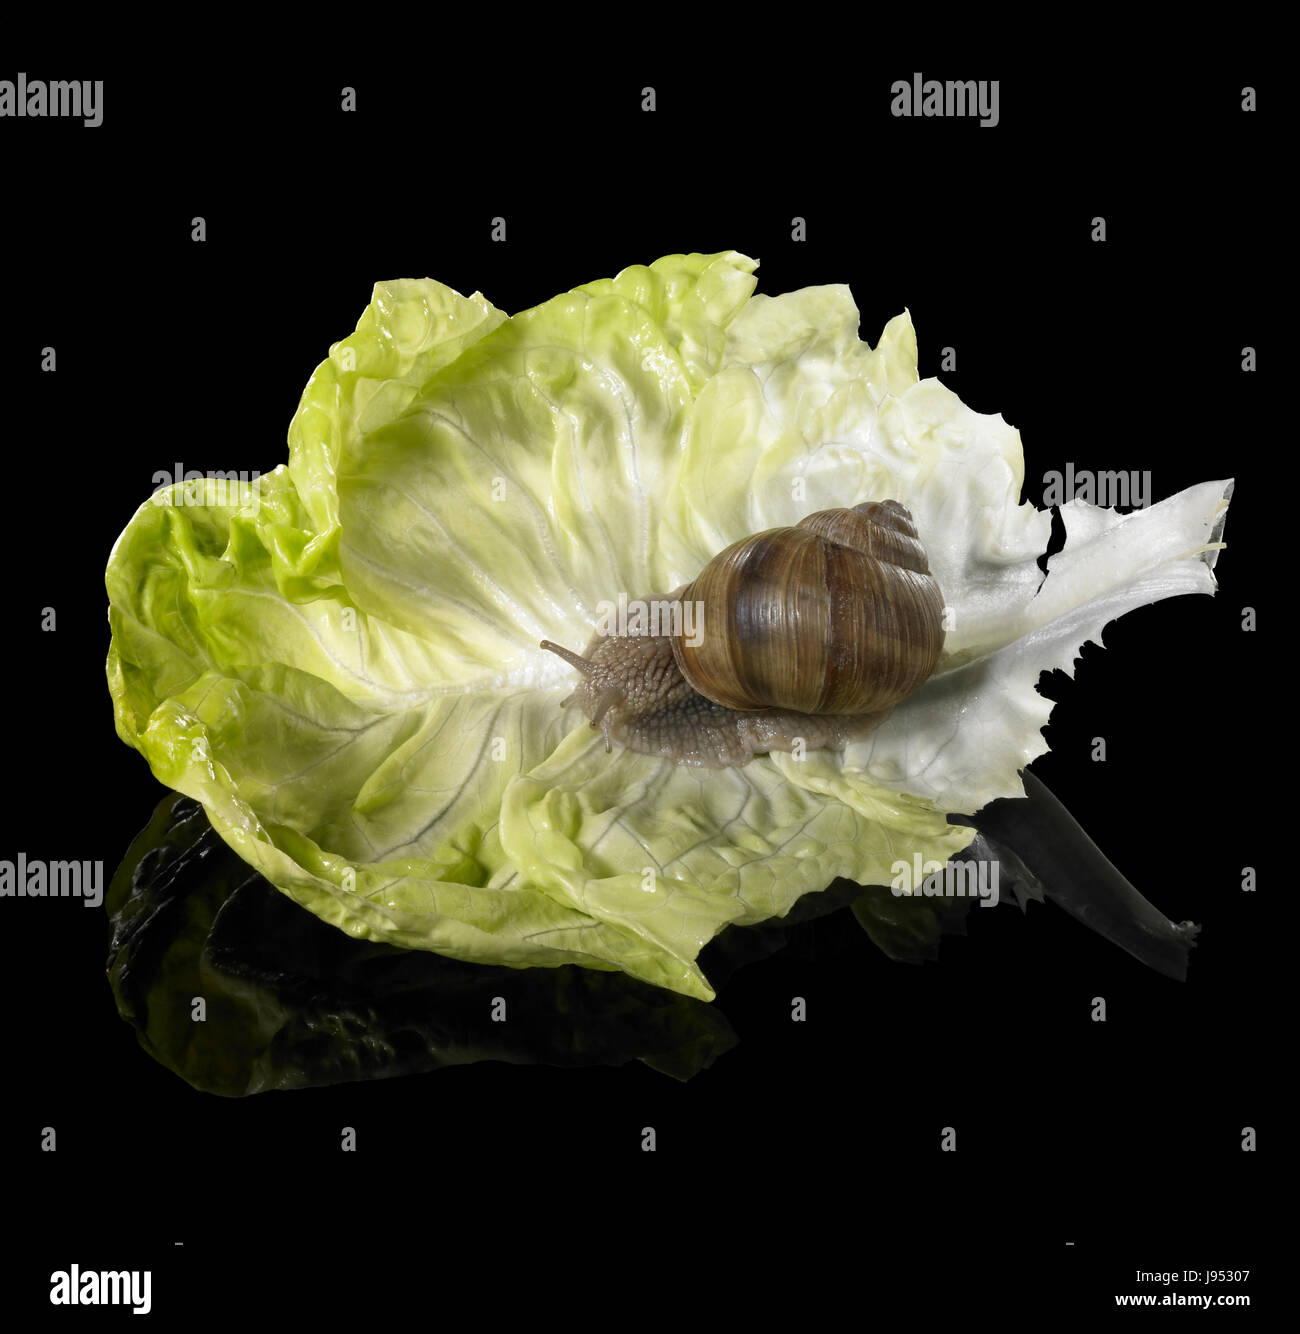 grapevine snail on green lettuce leaf Stock Photo